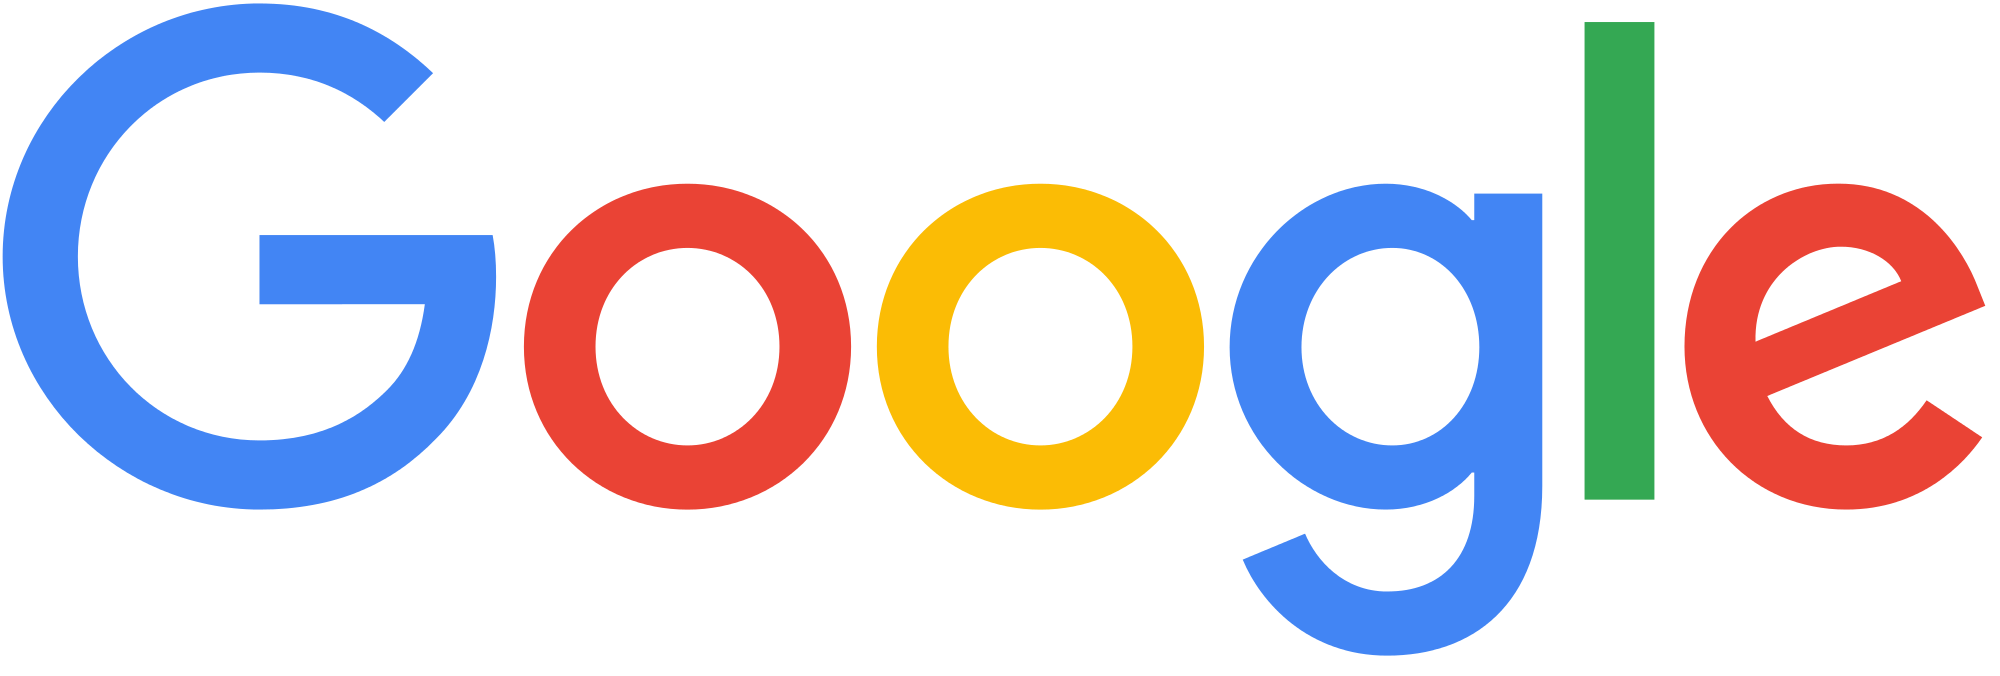 Google sponsorship